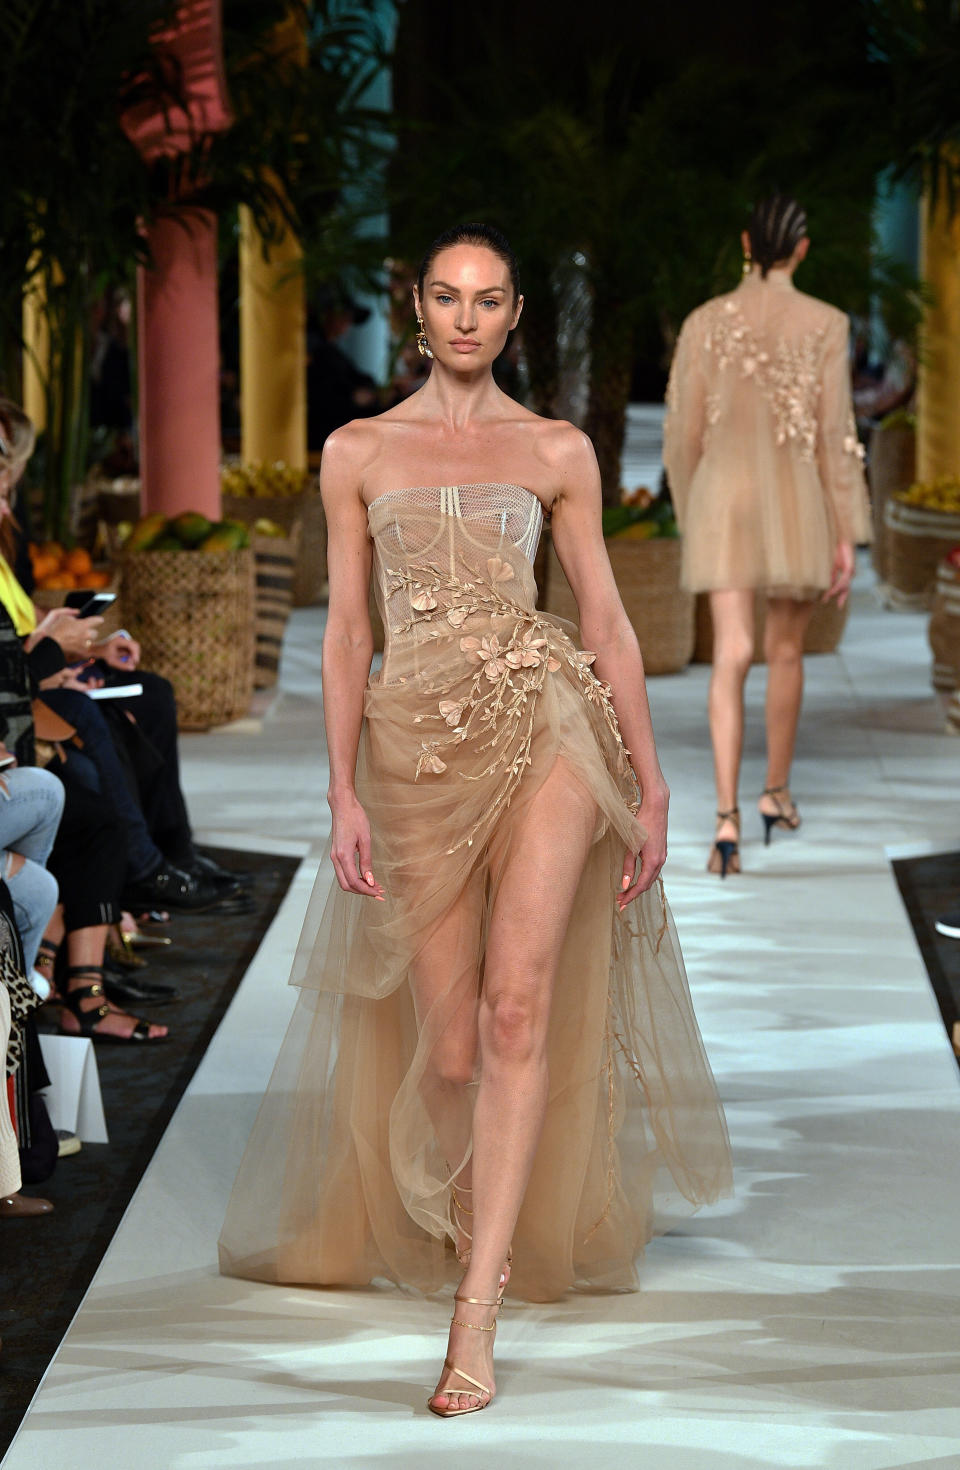 Candice Swanepoel walks the runway for Oscar de la Renta during New York Fashion Week on Sept. 10.